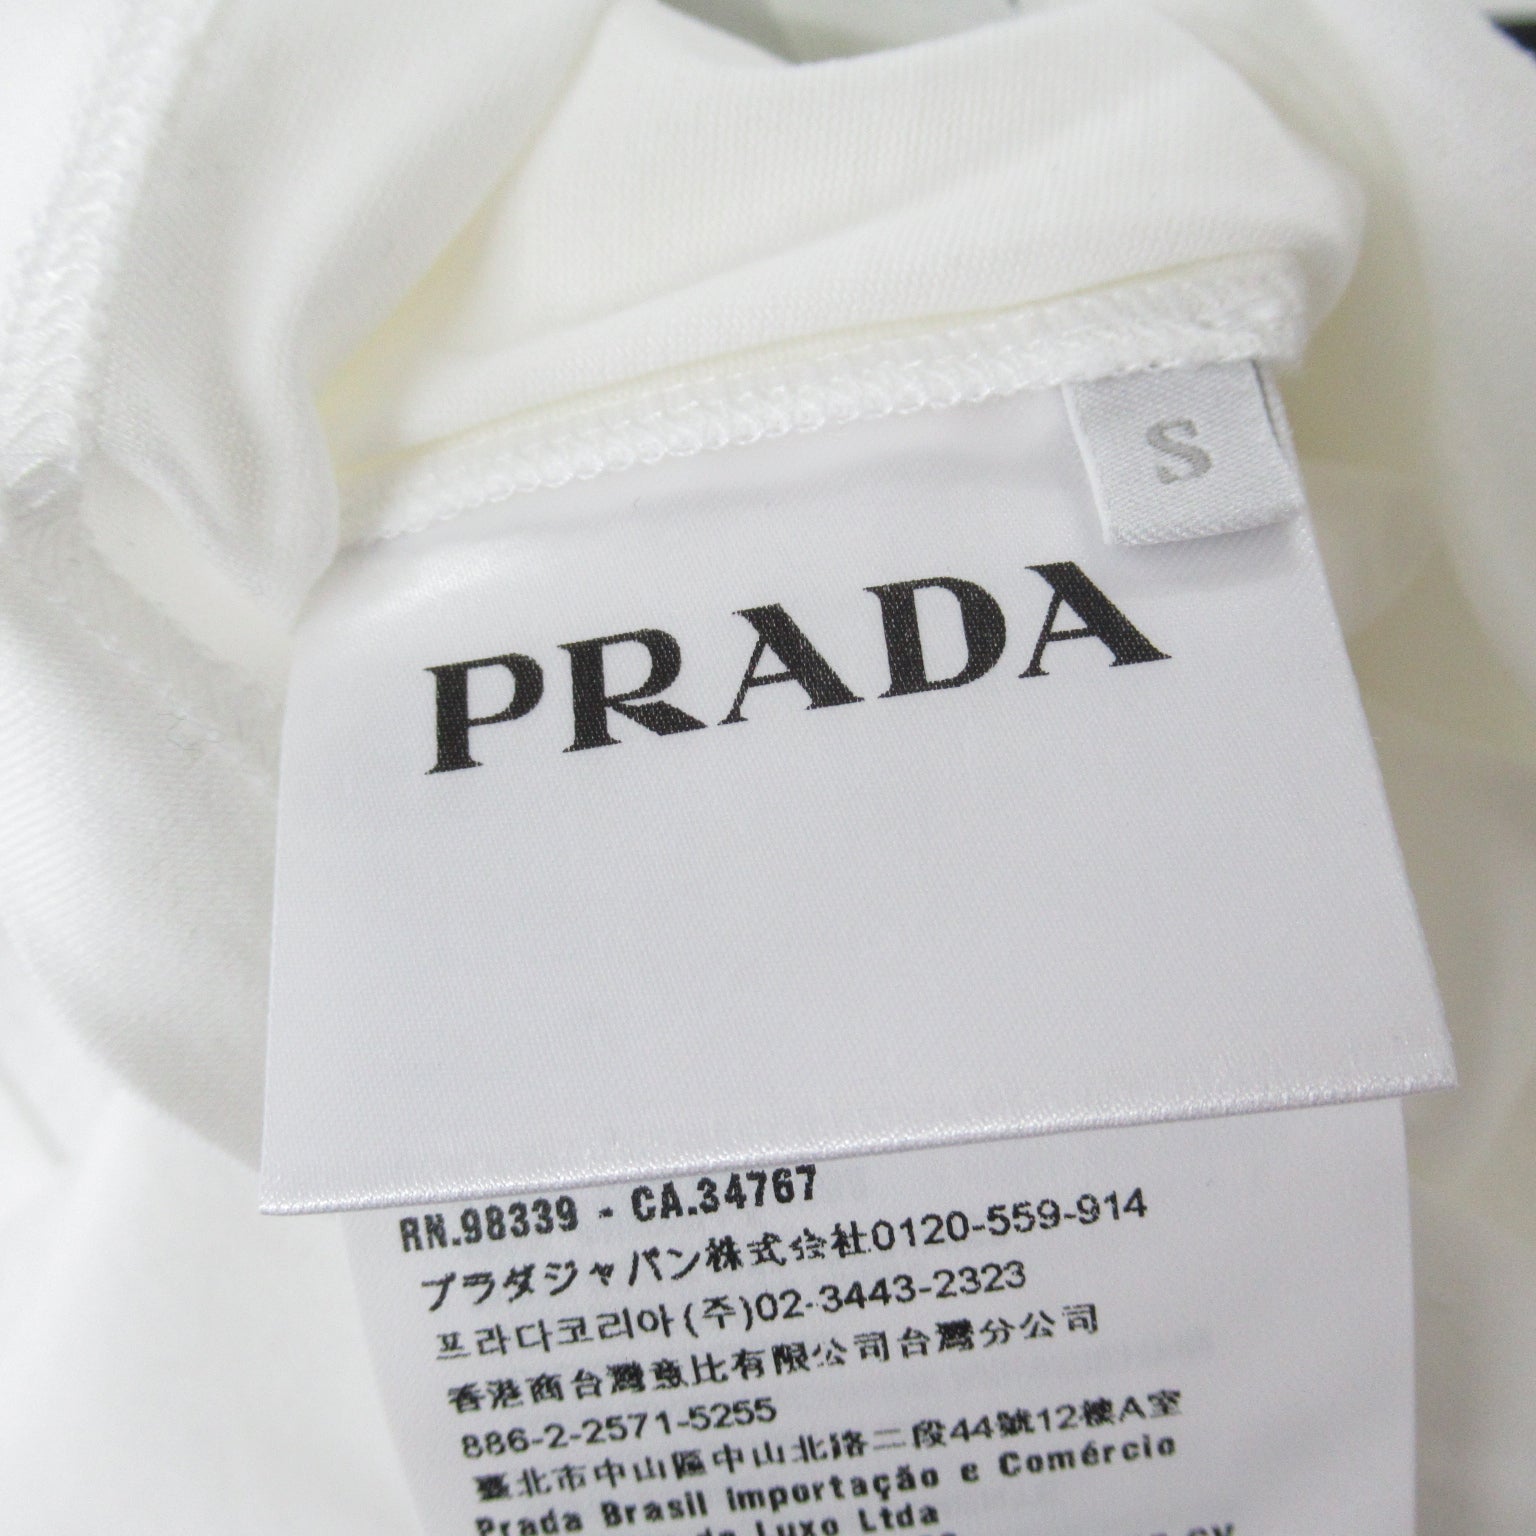 Prada  Half-Hand   Tops Cotton Men  White 135664 1QJC